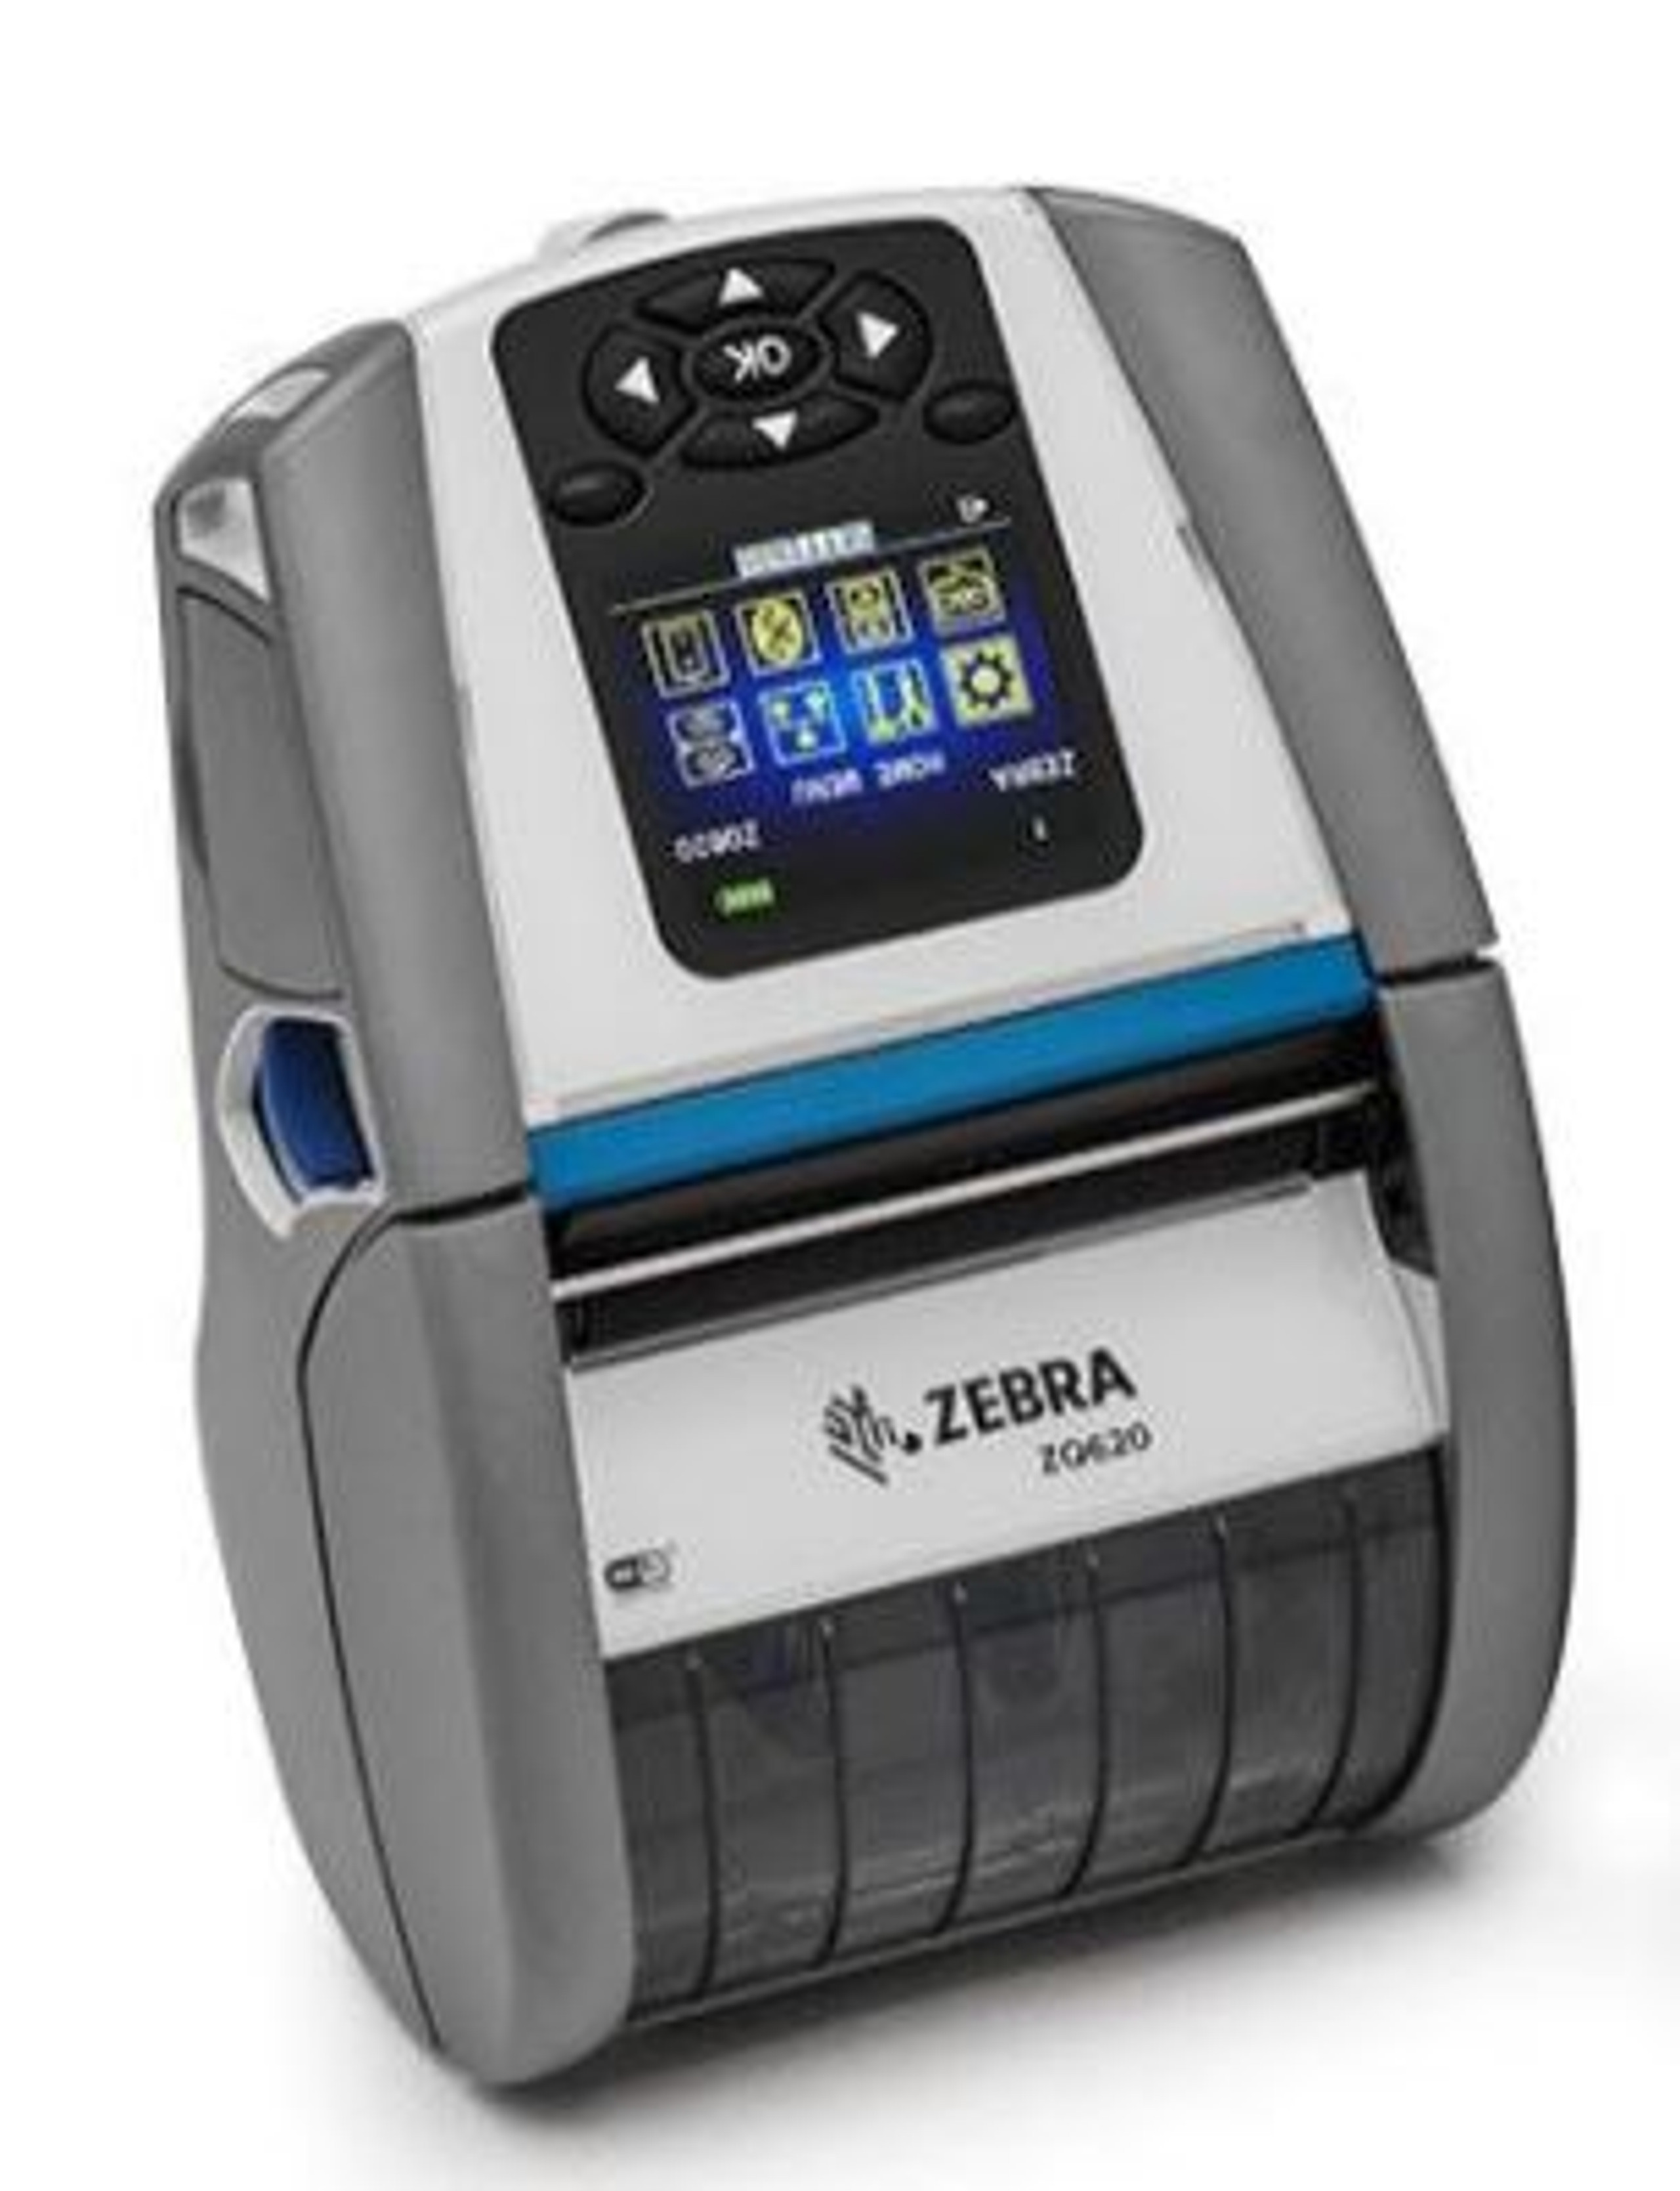 Zebra Zq620 Hc Direct Thermal Mobile Printer For Healthcare 3544